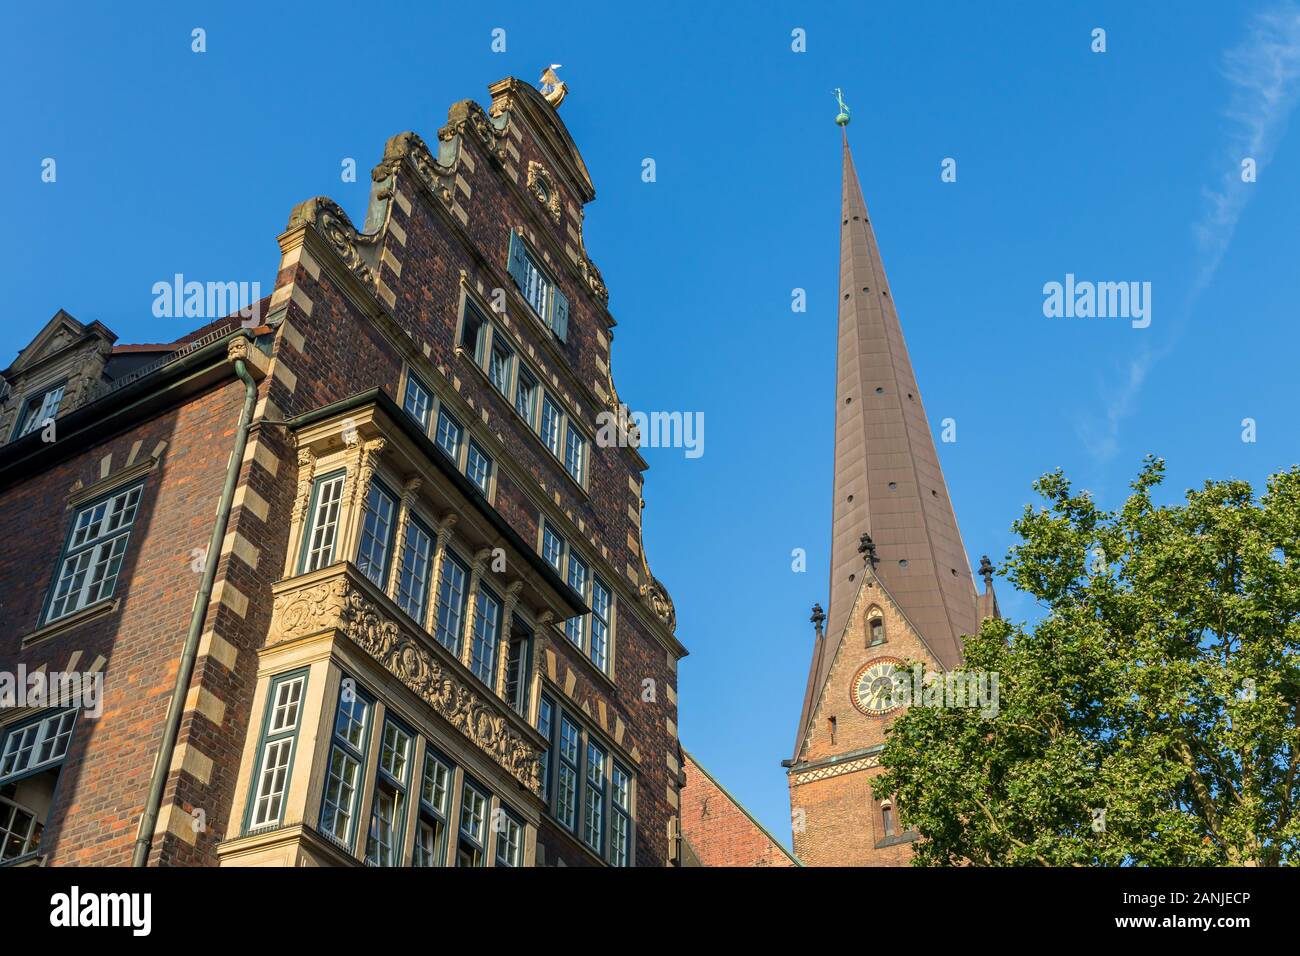 The Hulbe-Haus and the tower of Saint Peter's Church seen from Moenckebergstrasse, Hamburg, Germany, Europe Stock Photo